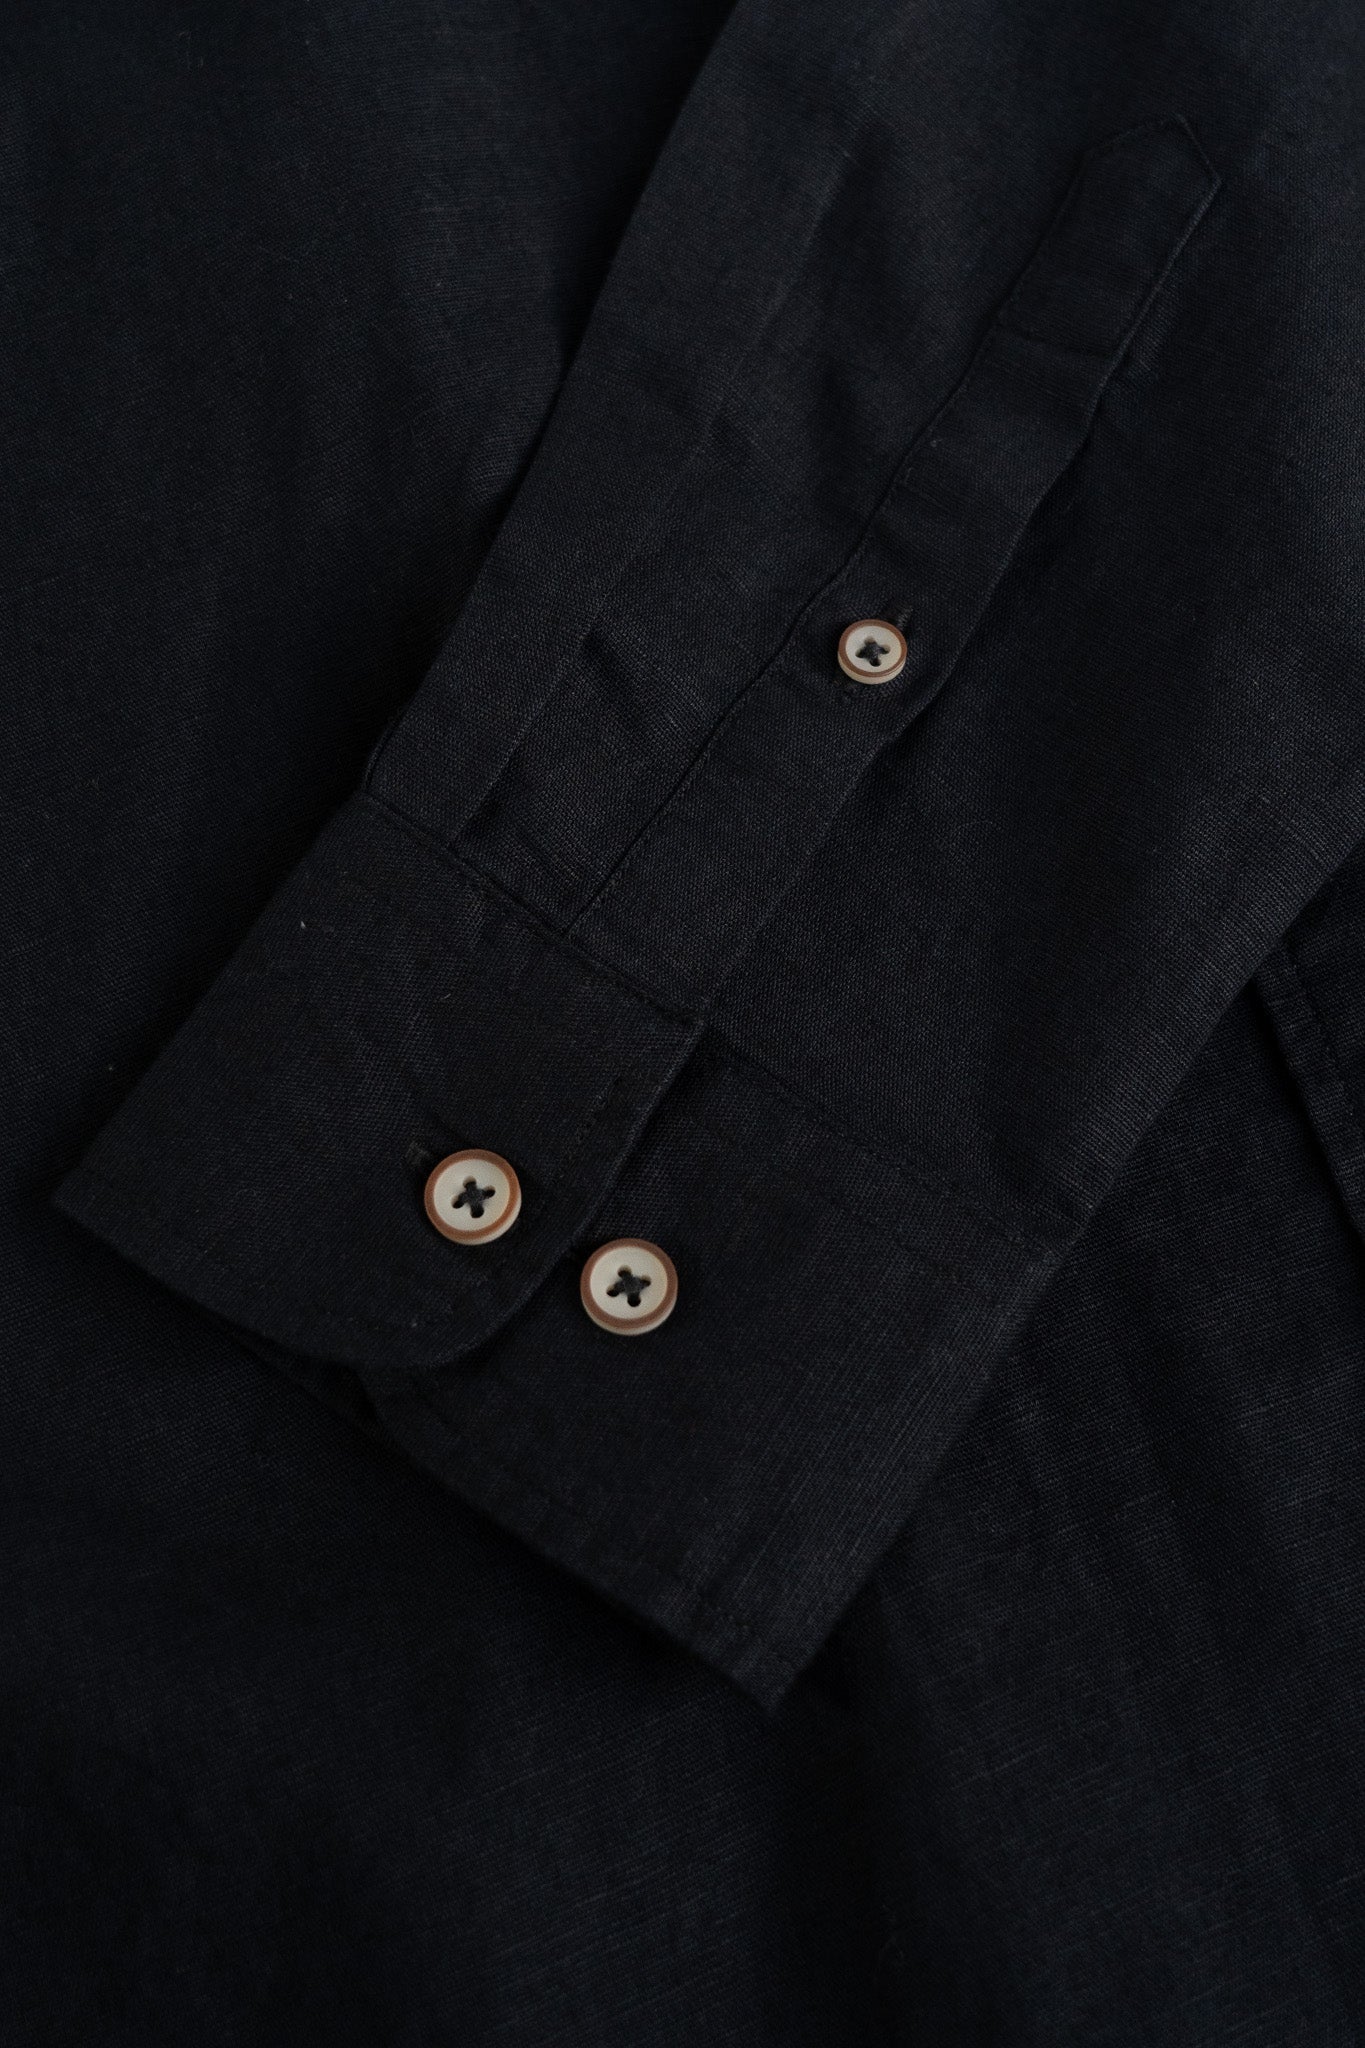 Bare Brown Mandarin Collar Cotton Linen Shirt, Slim Fit with Full Sleeves - Black